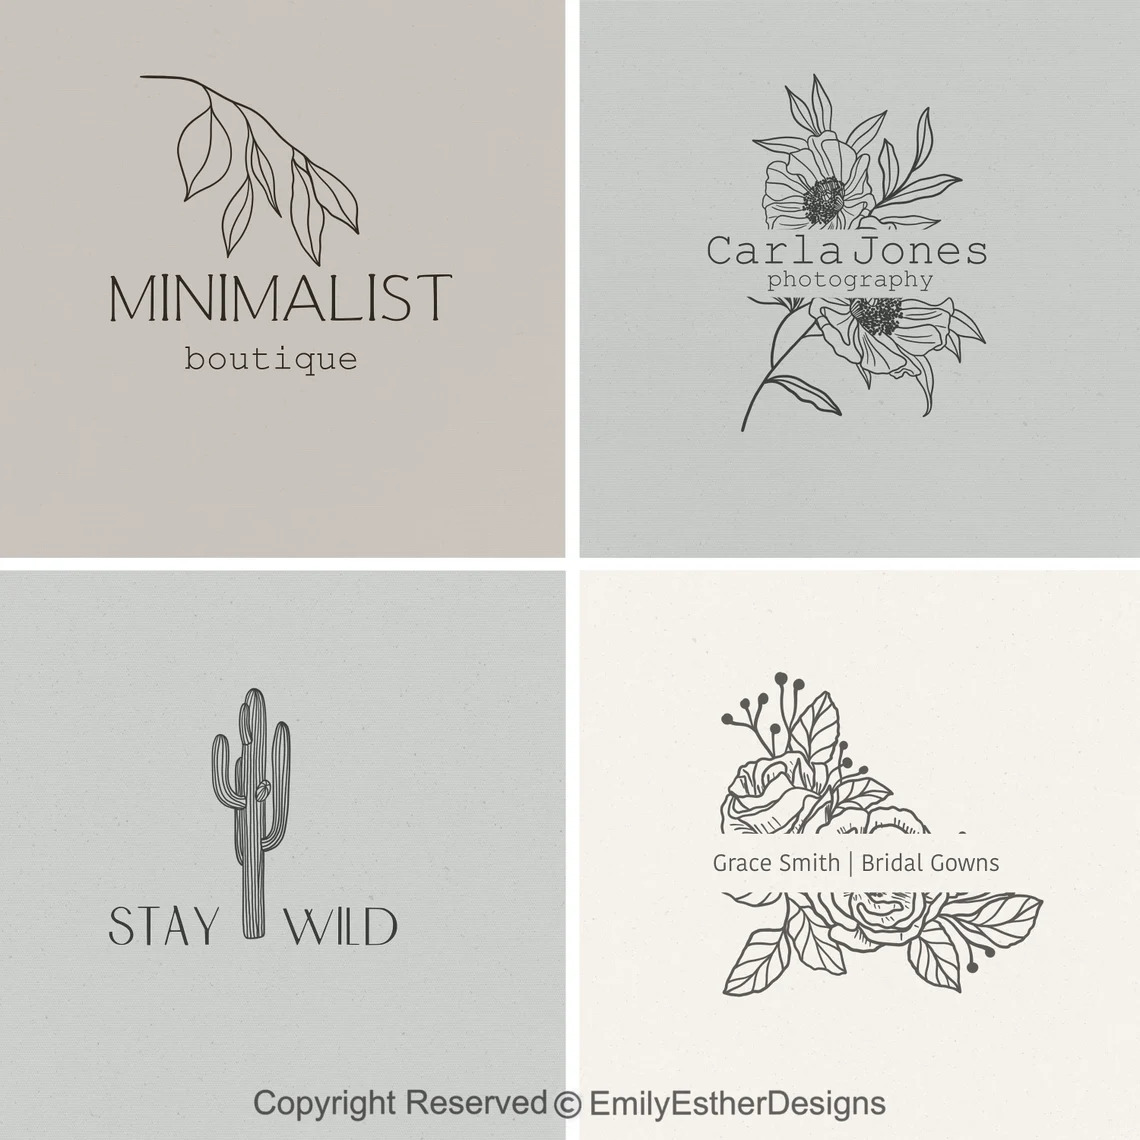 Unique logos with plants.